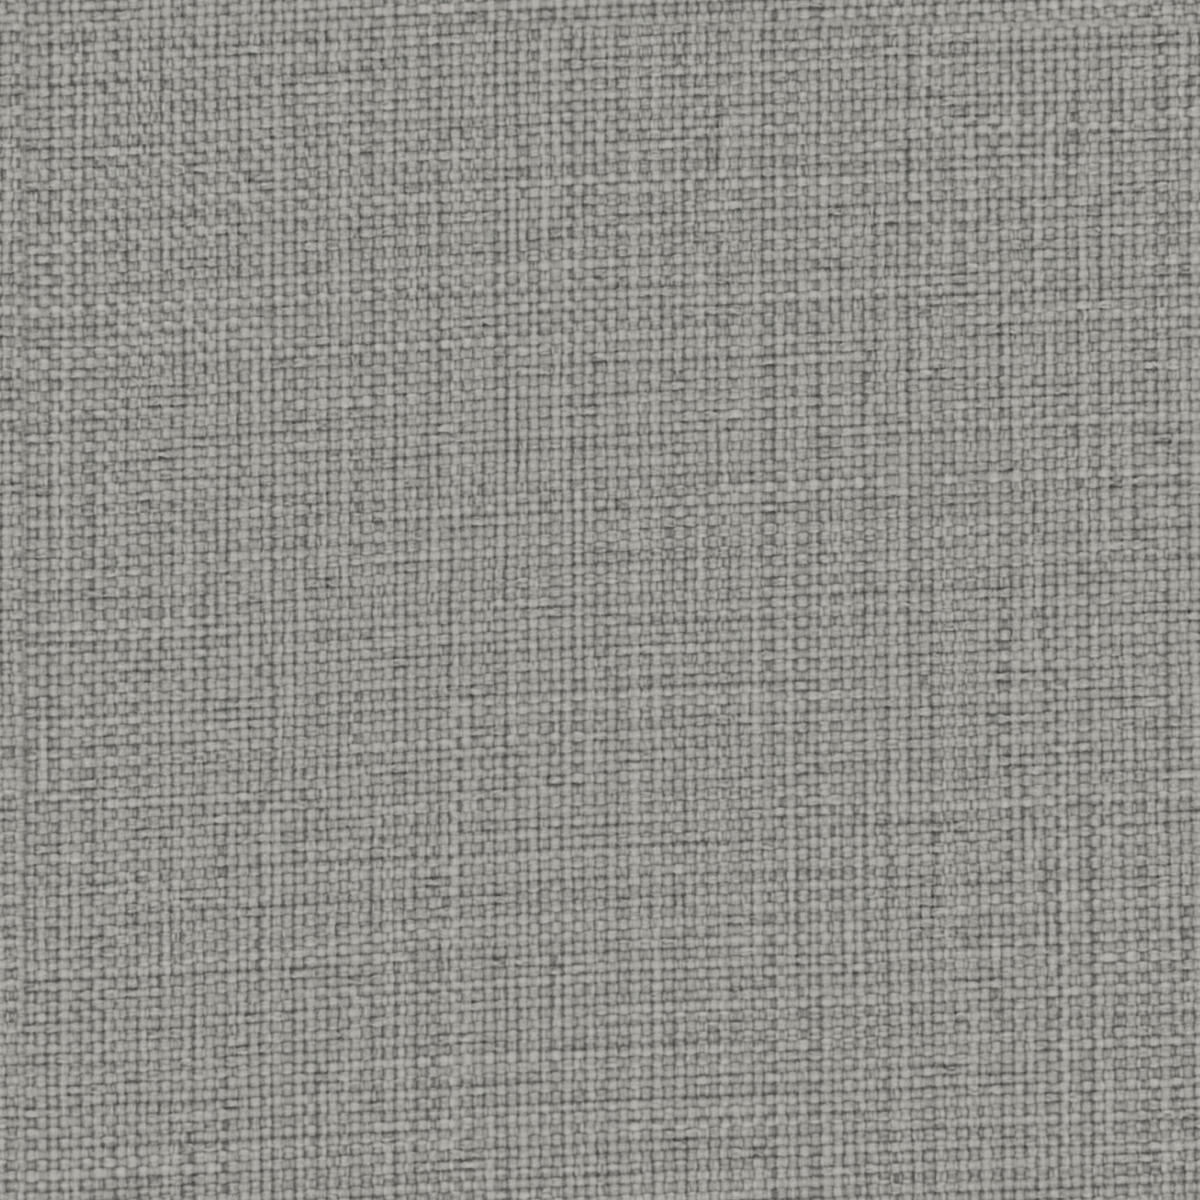 POLSTERBETT 140/200 cm  in Grau  - Anthrazit/Grau, MODERN, Textil/Metall (140/200cm) - Hasena